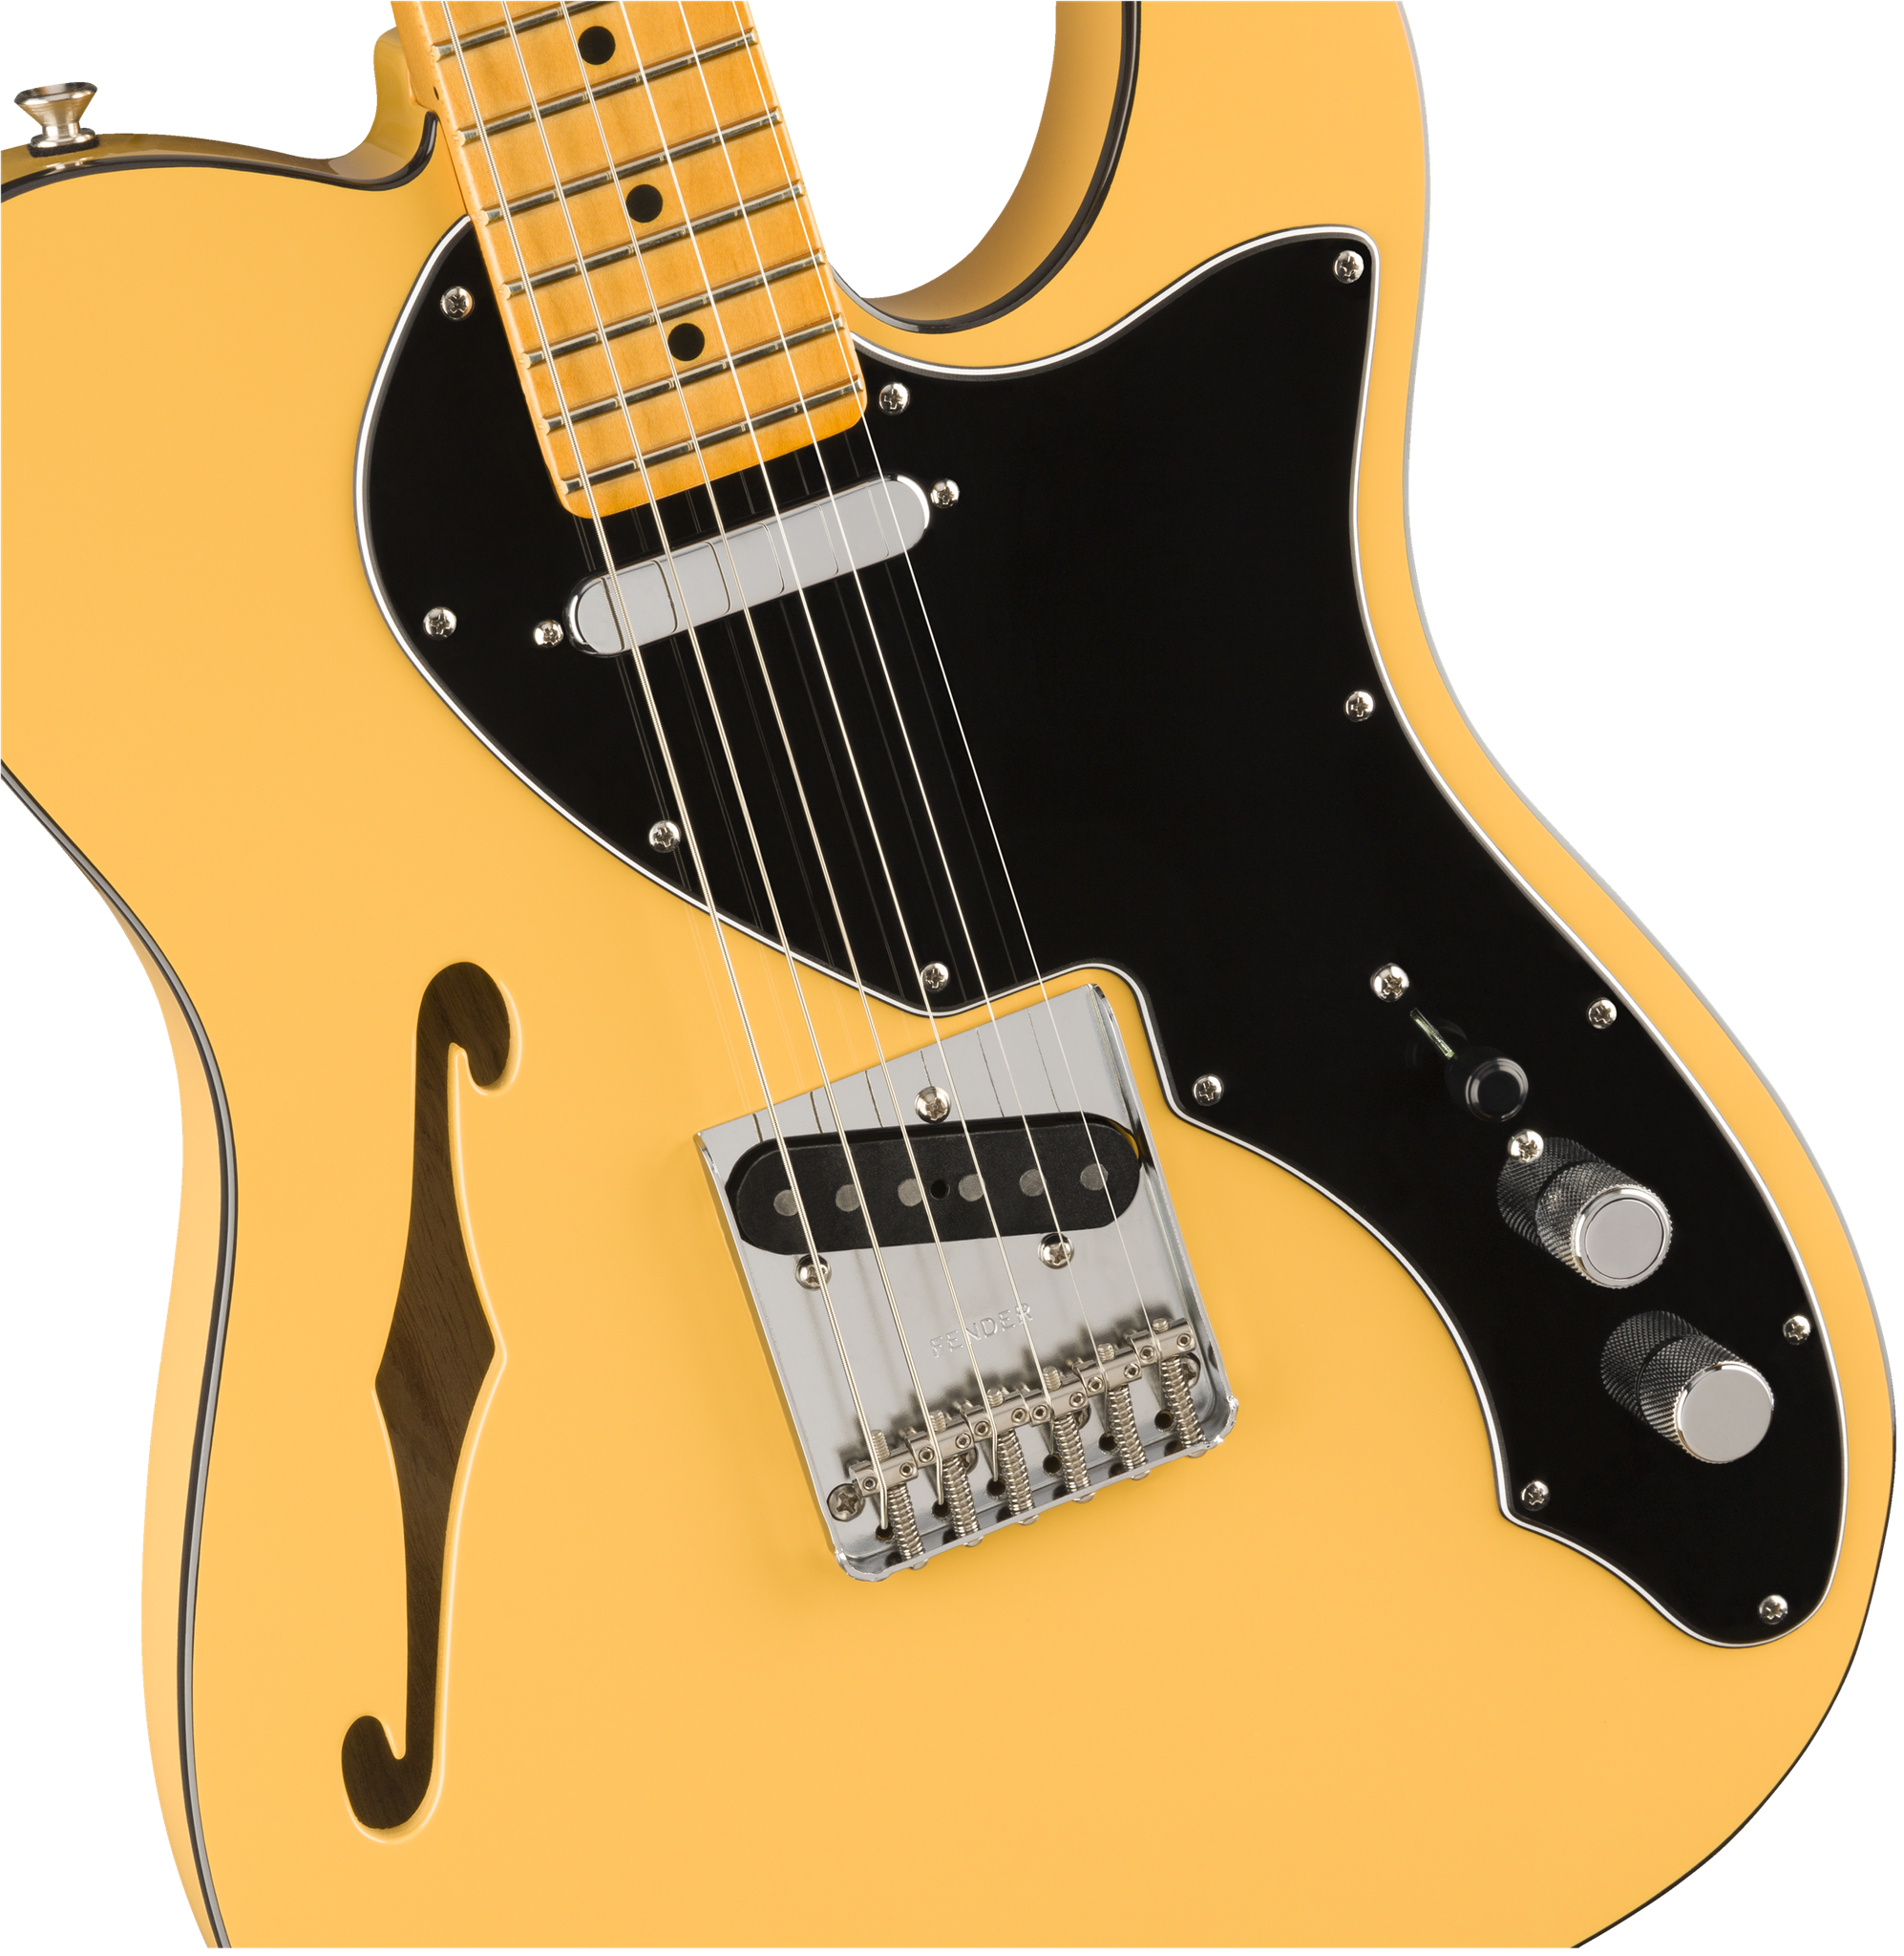 Fender Britt Daniel Tele Thinline Review